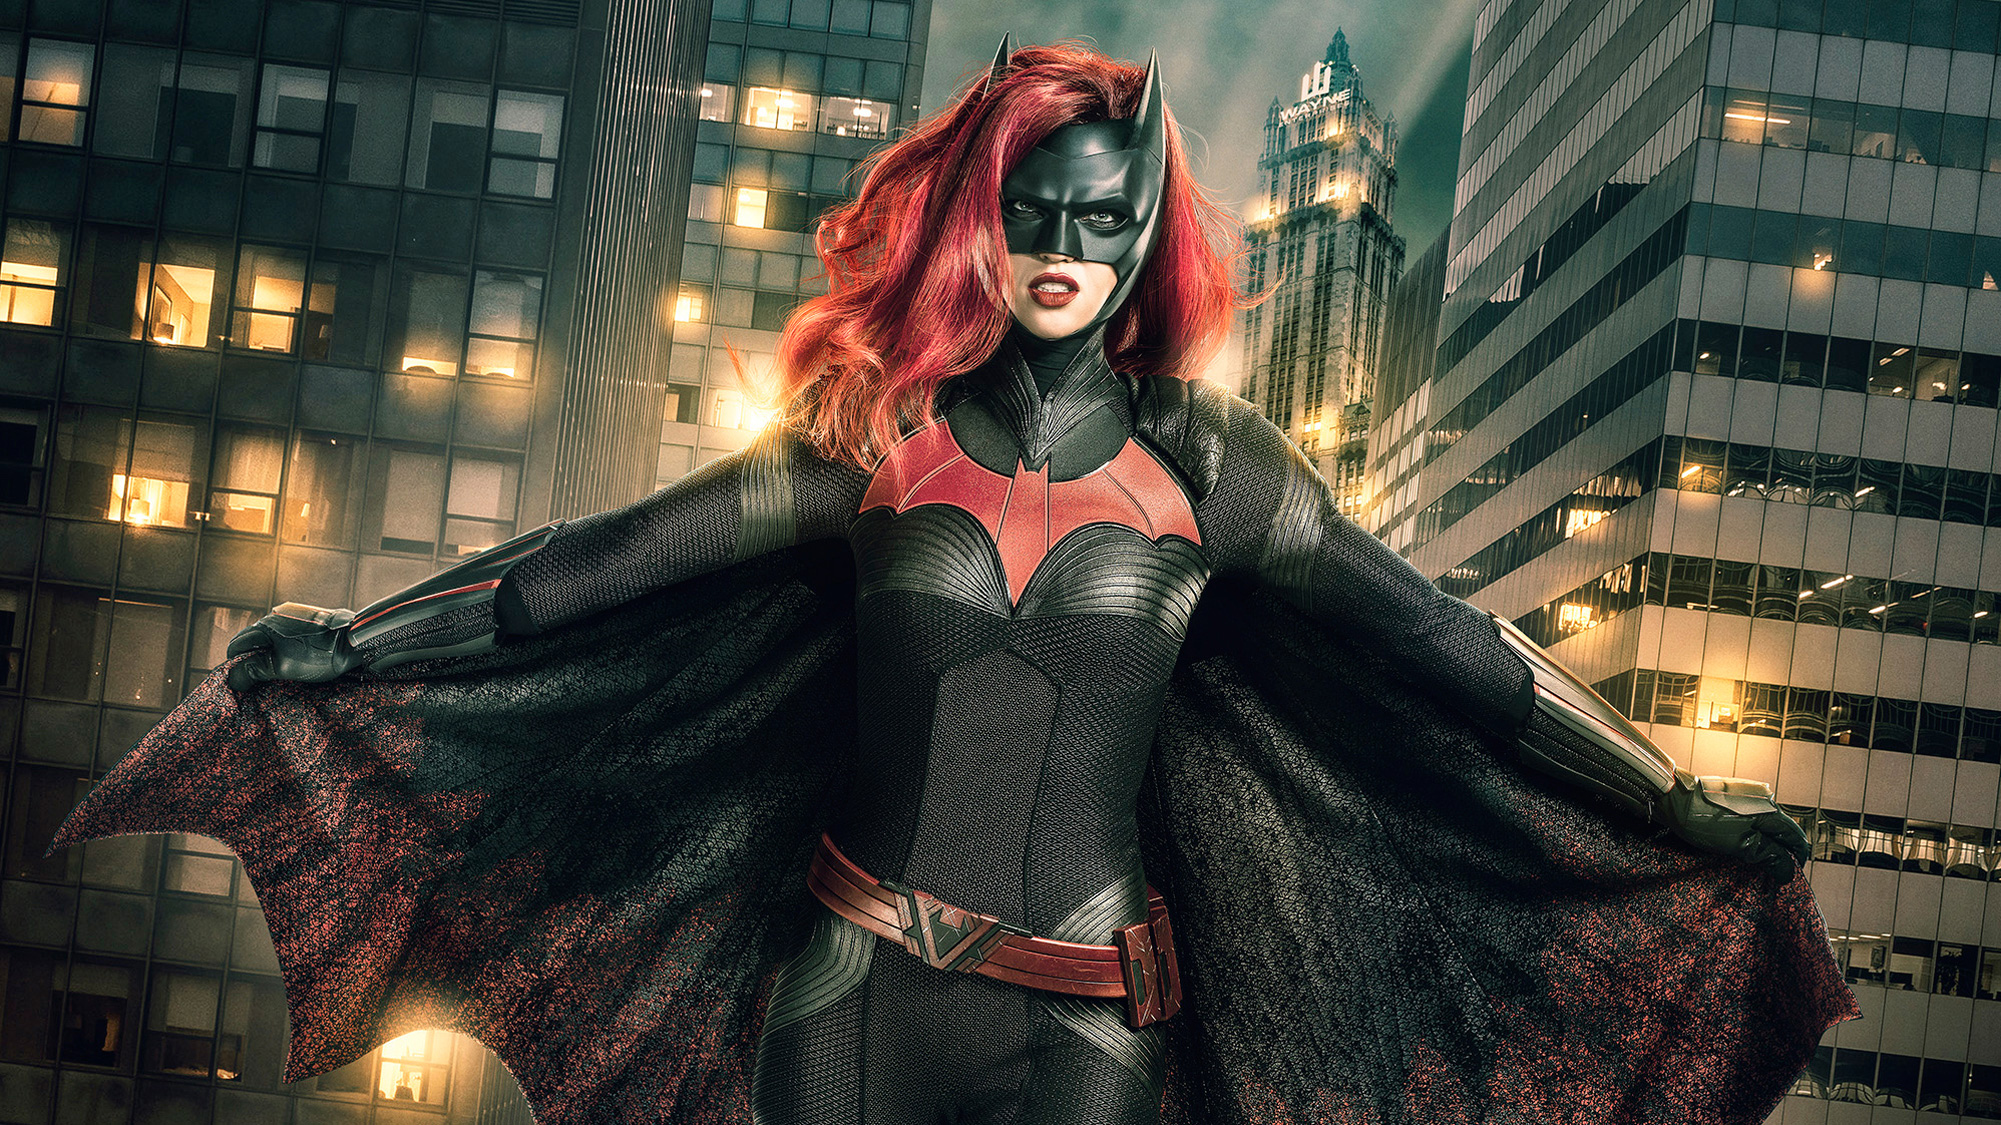 fondo de pantalla de batwoman,personaje de ficción,hombre murciélago,superhéroe,cg artwork,supervillano